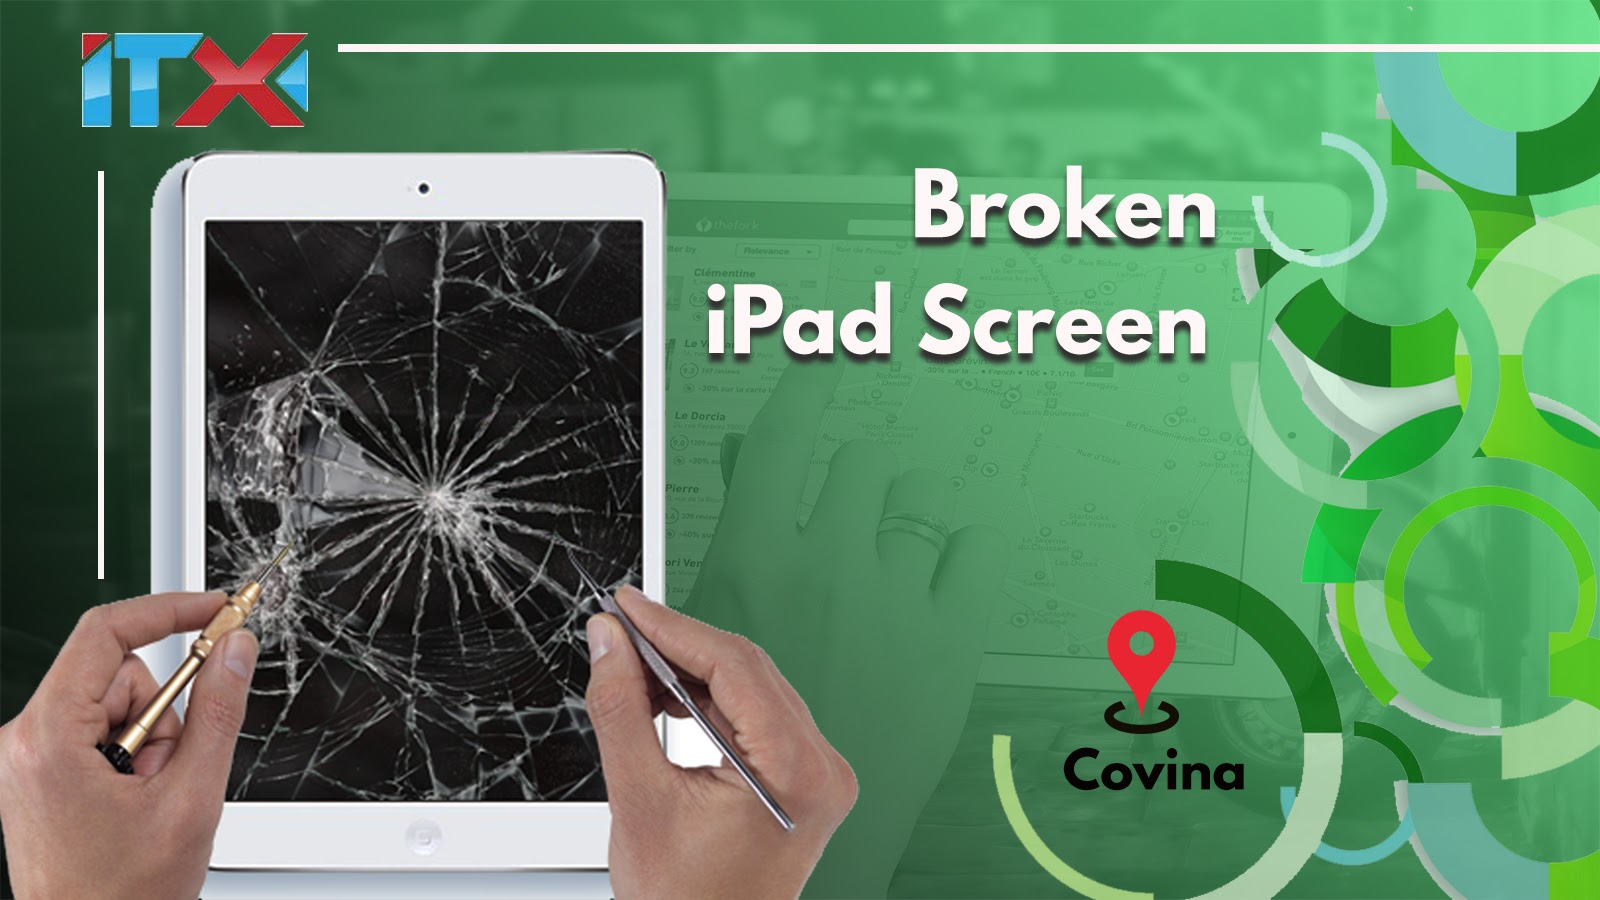 Broken iPad Screen Covina